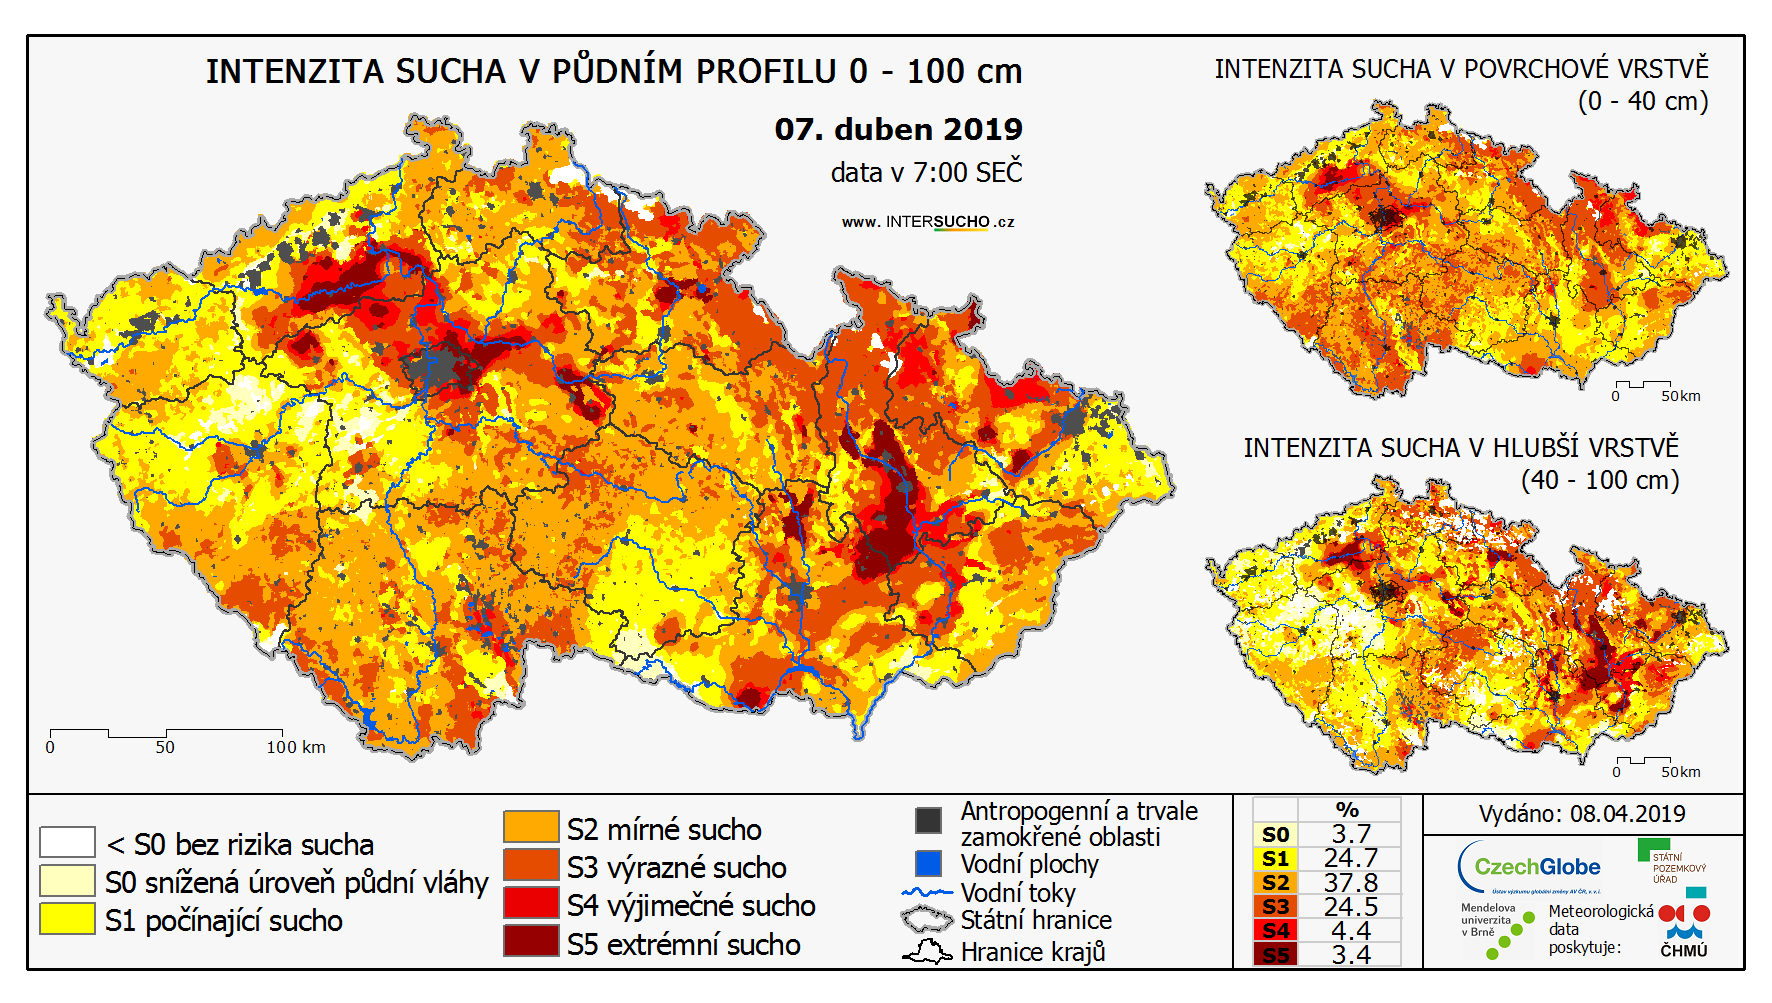 Intenzita sucha v půdním profilu 0 - 100 cm - 7. duben 2019 